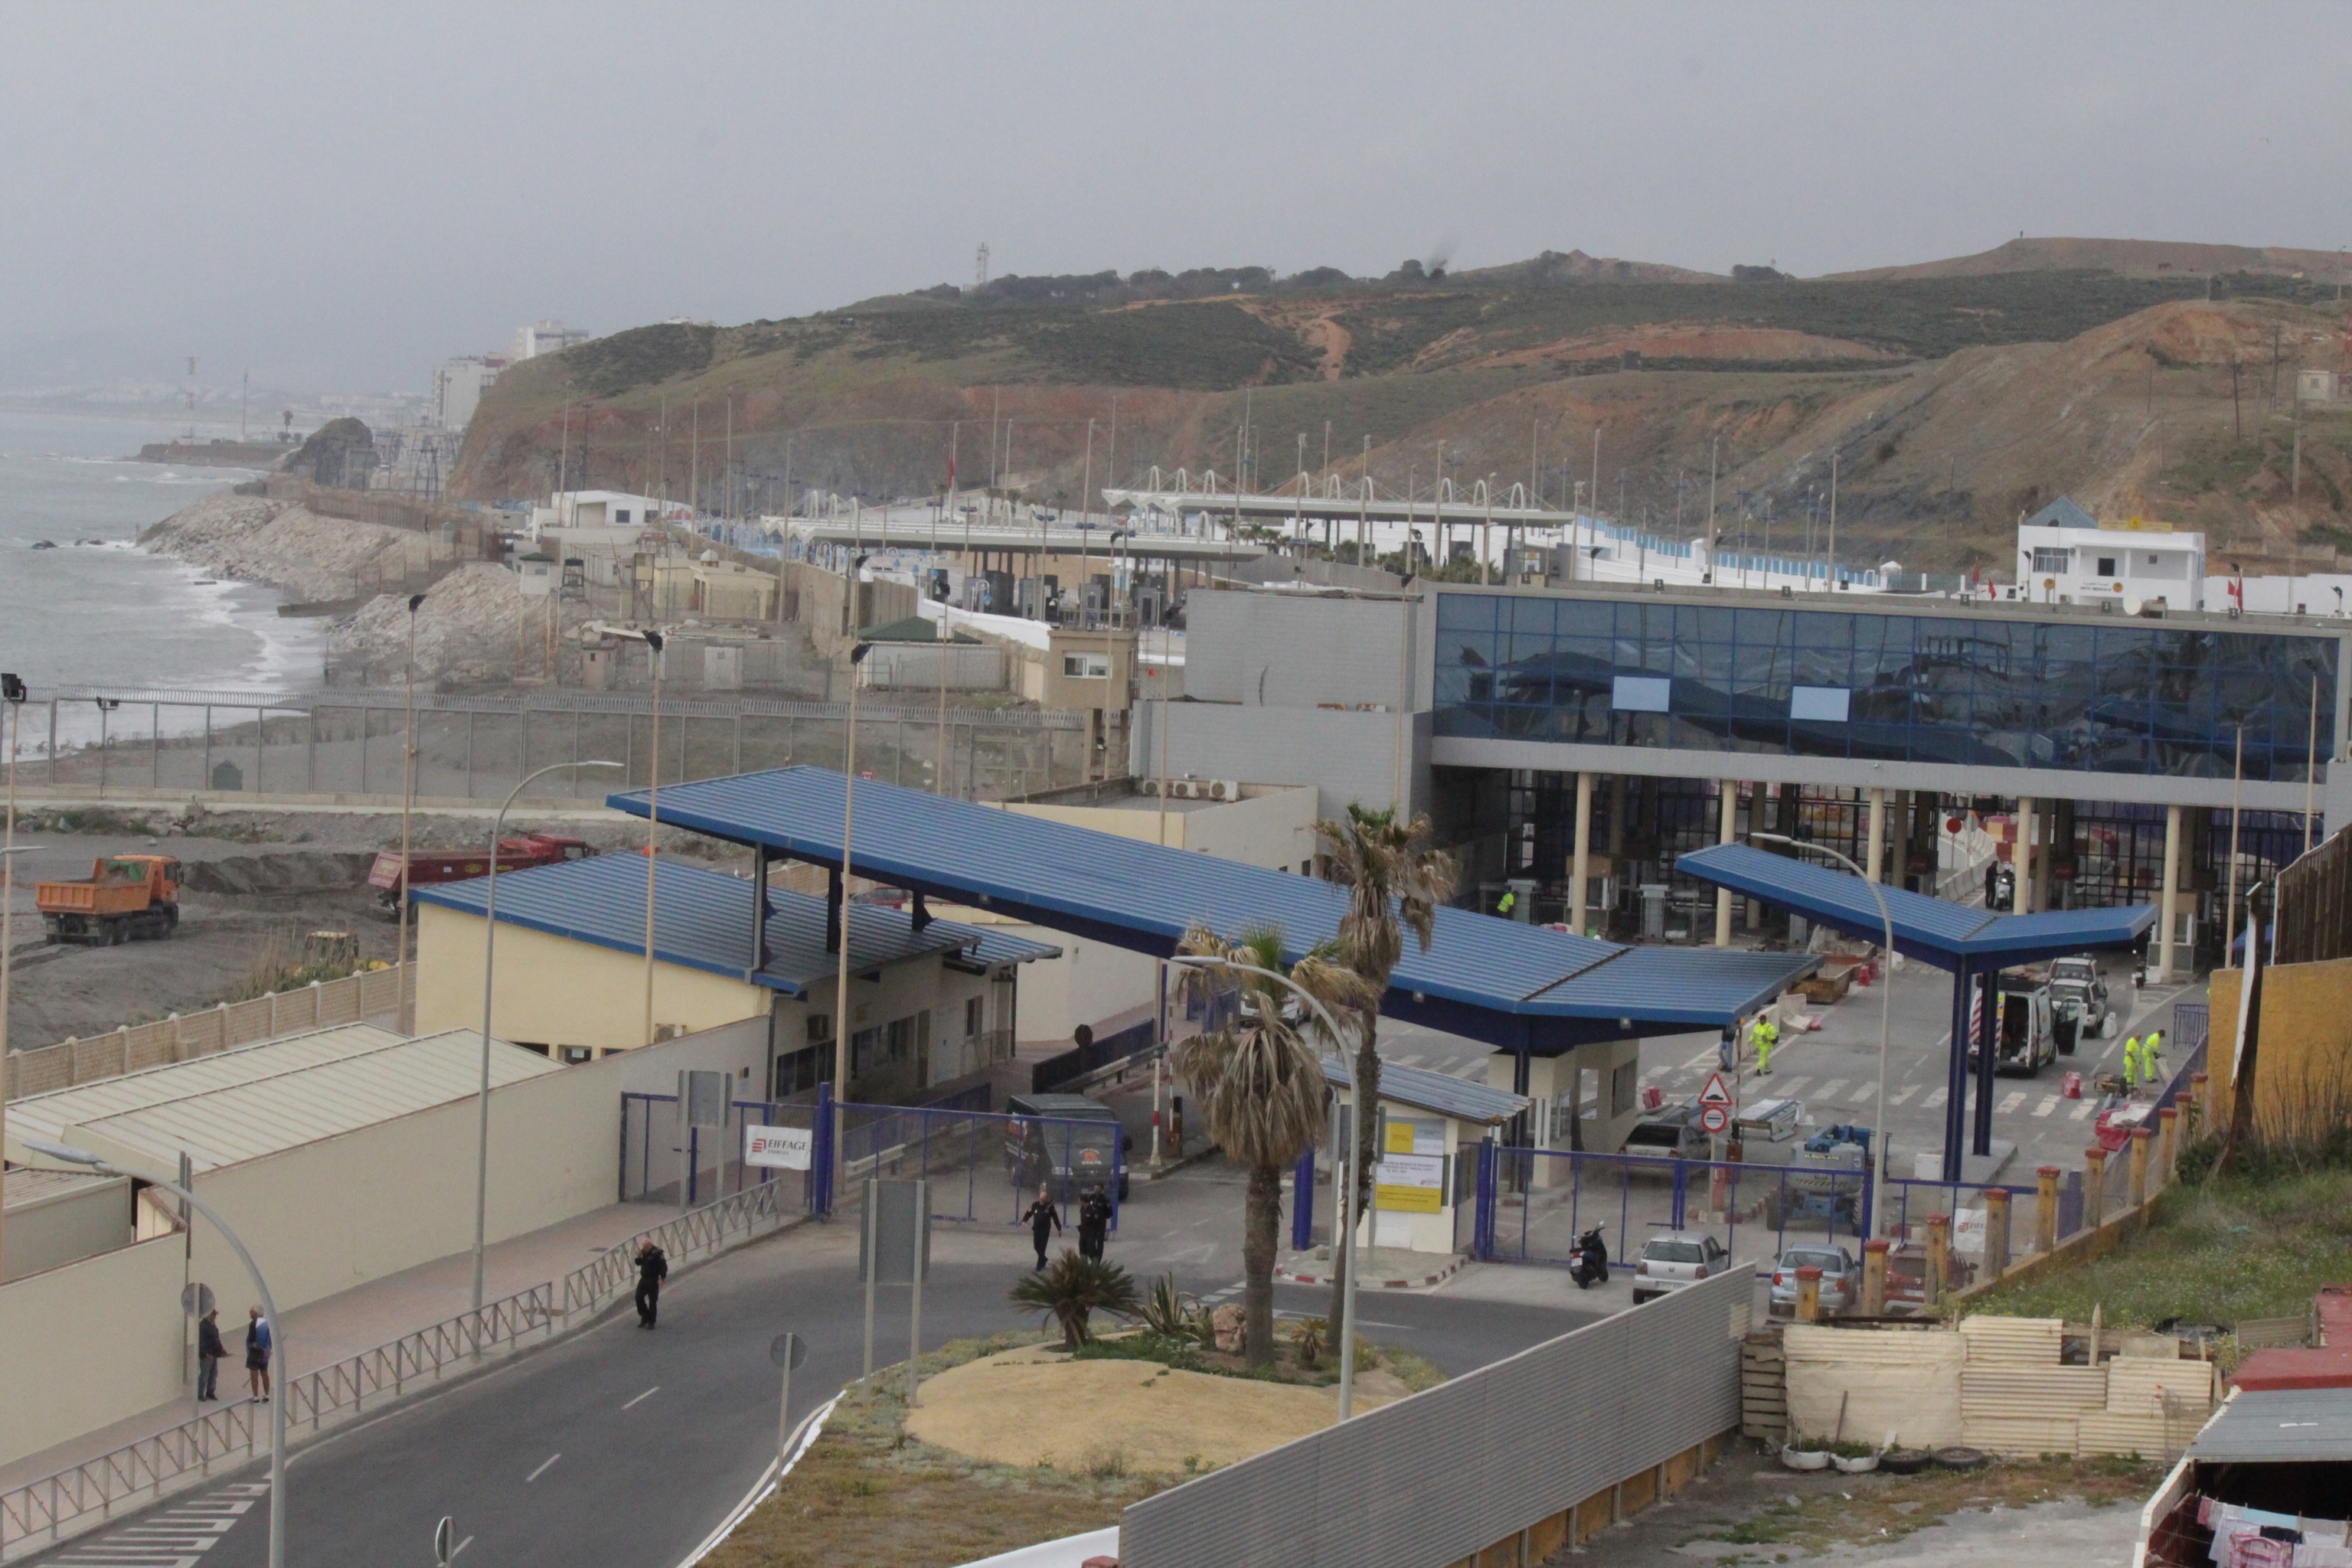 Bordering El Tarajal in Ceuta.